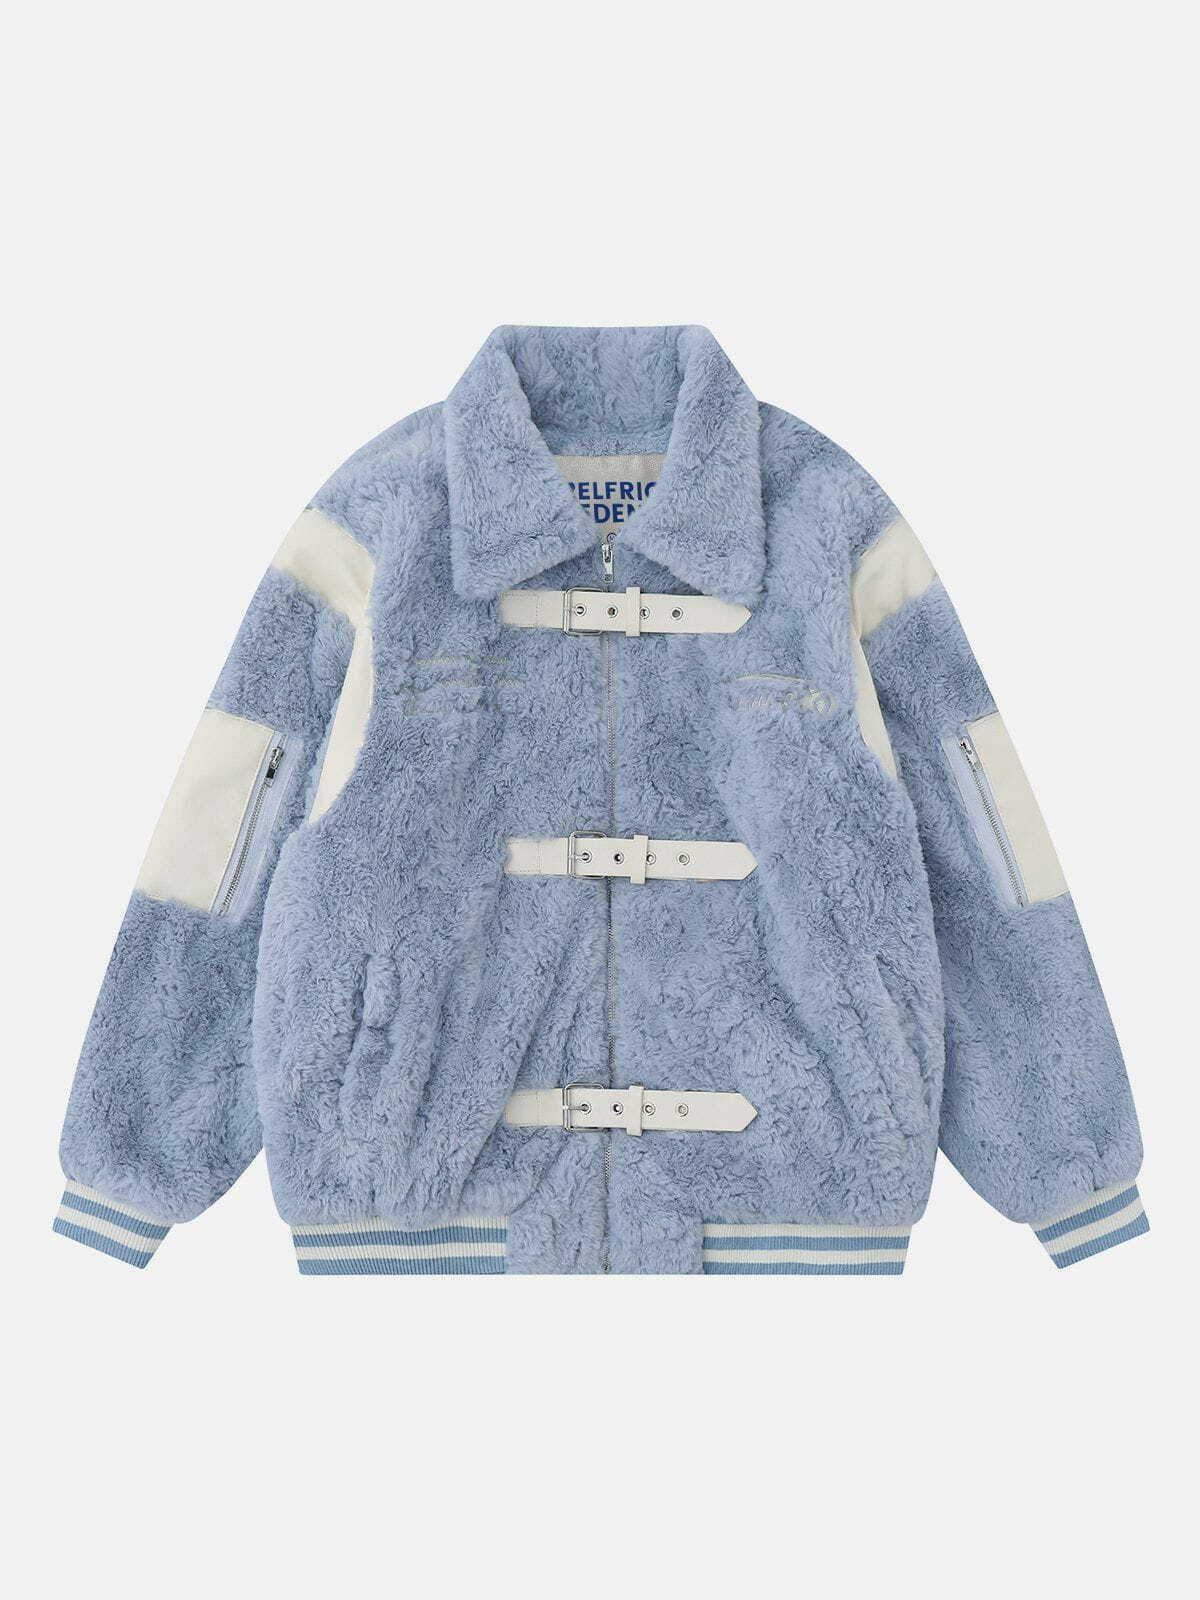 sherpa patchwork coat edgy & vibrant streetwear 7187